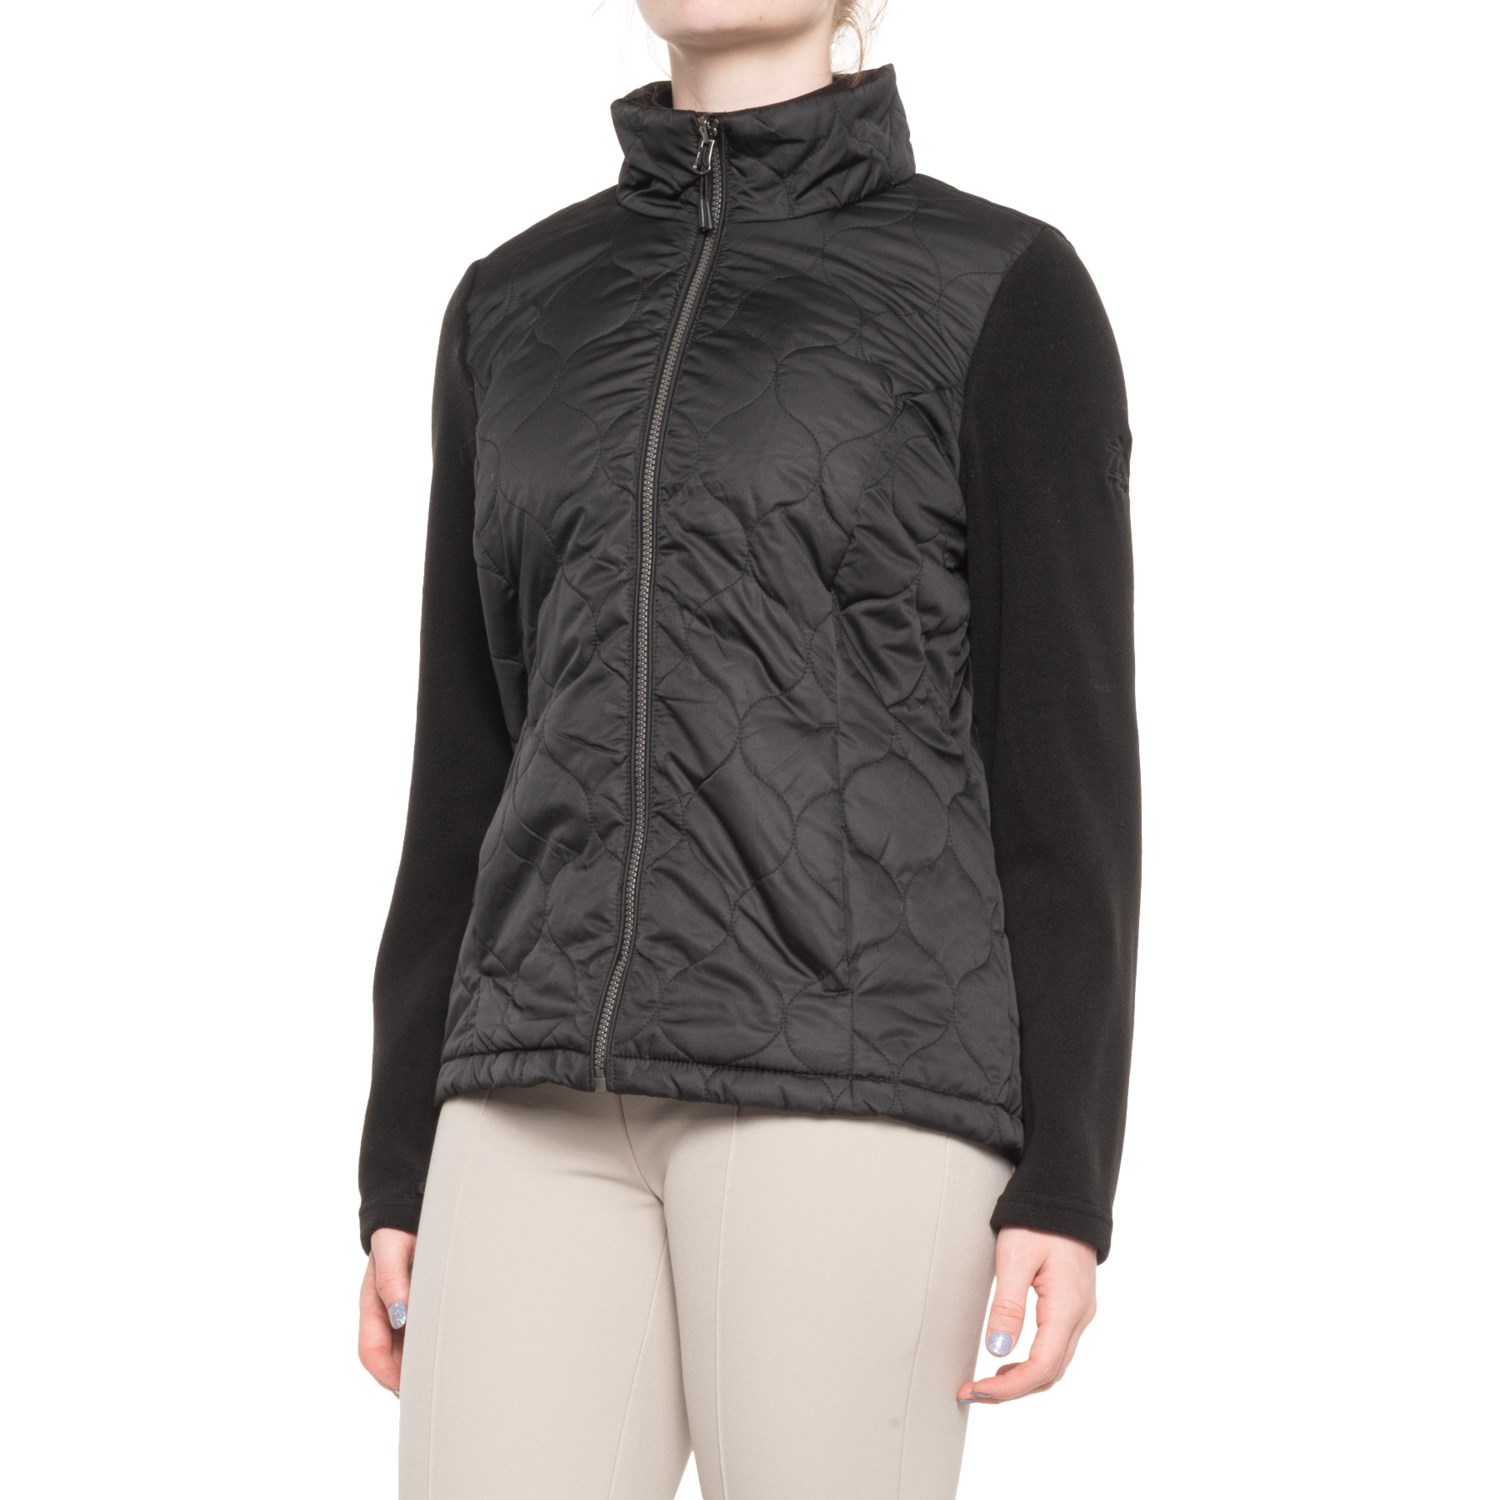 ZeroXposur Danica Systems Jacket (For Women) - Save 50%